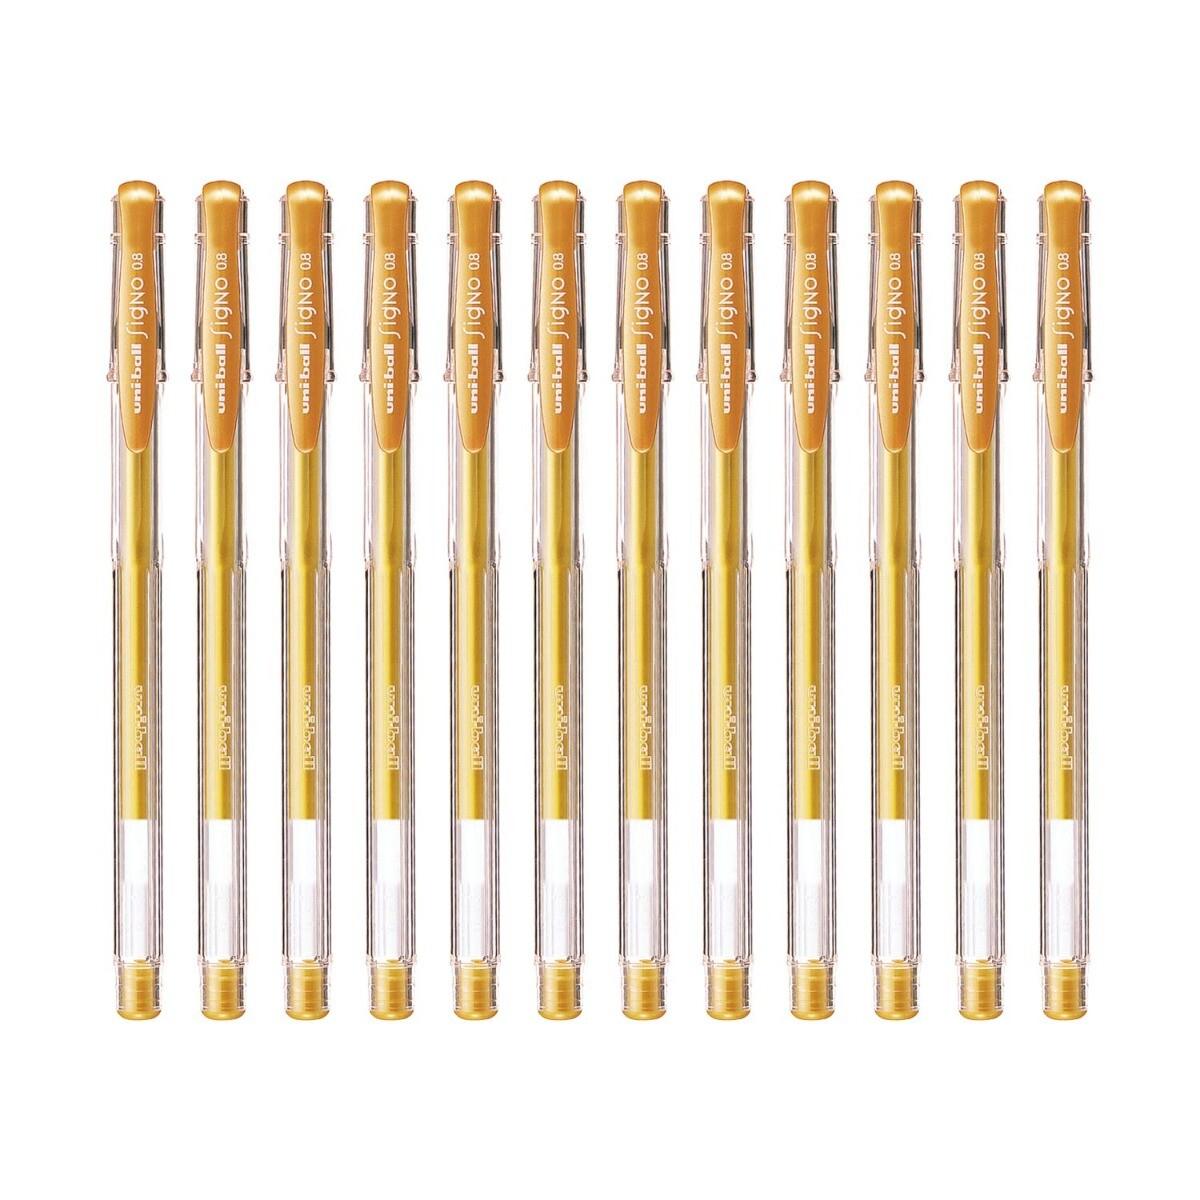 Uni-ball Signo Gel Ink Pen, Gold, 12pcs-box, MI-UM100-GD - Altimus